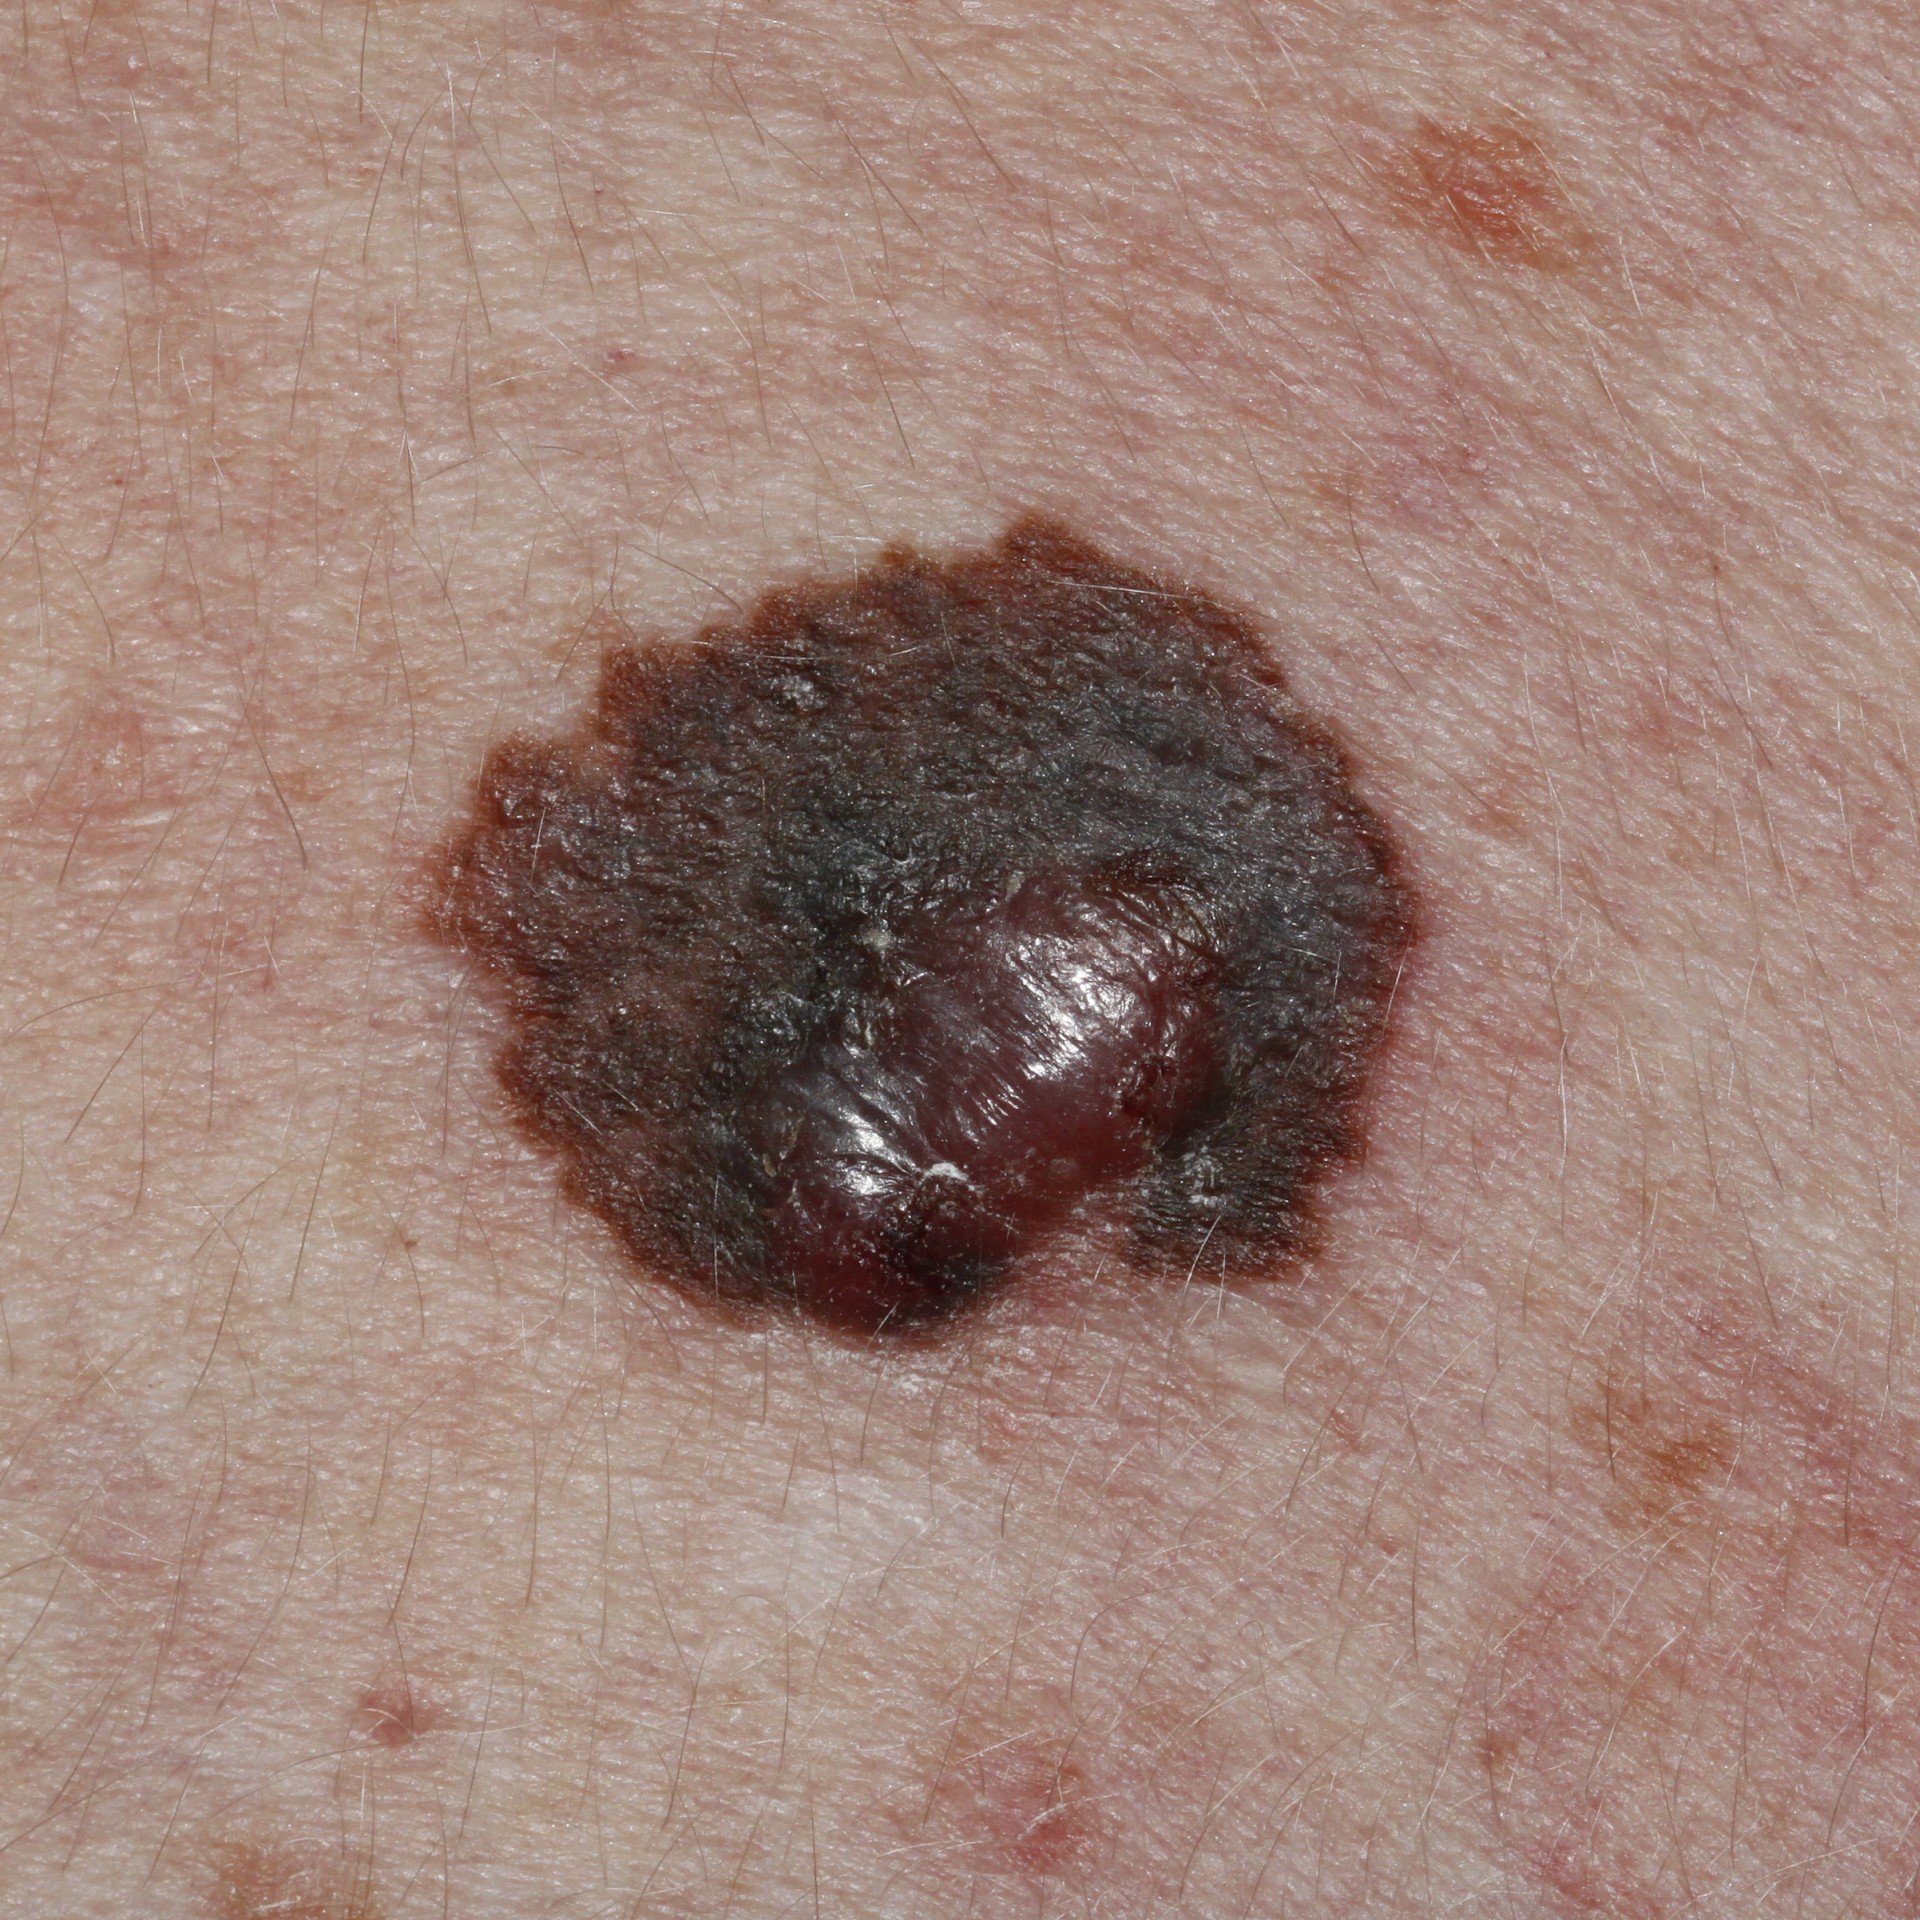 superficial spreading malignant melanoma